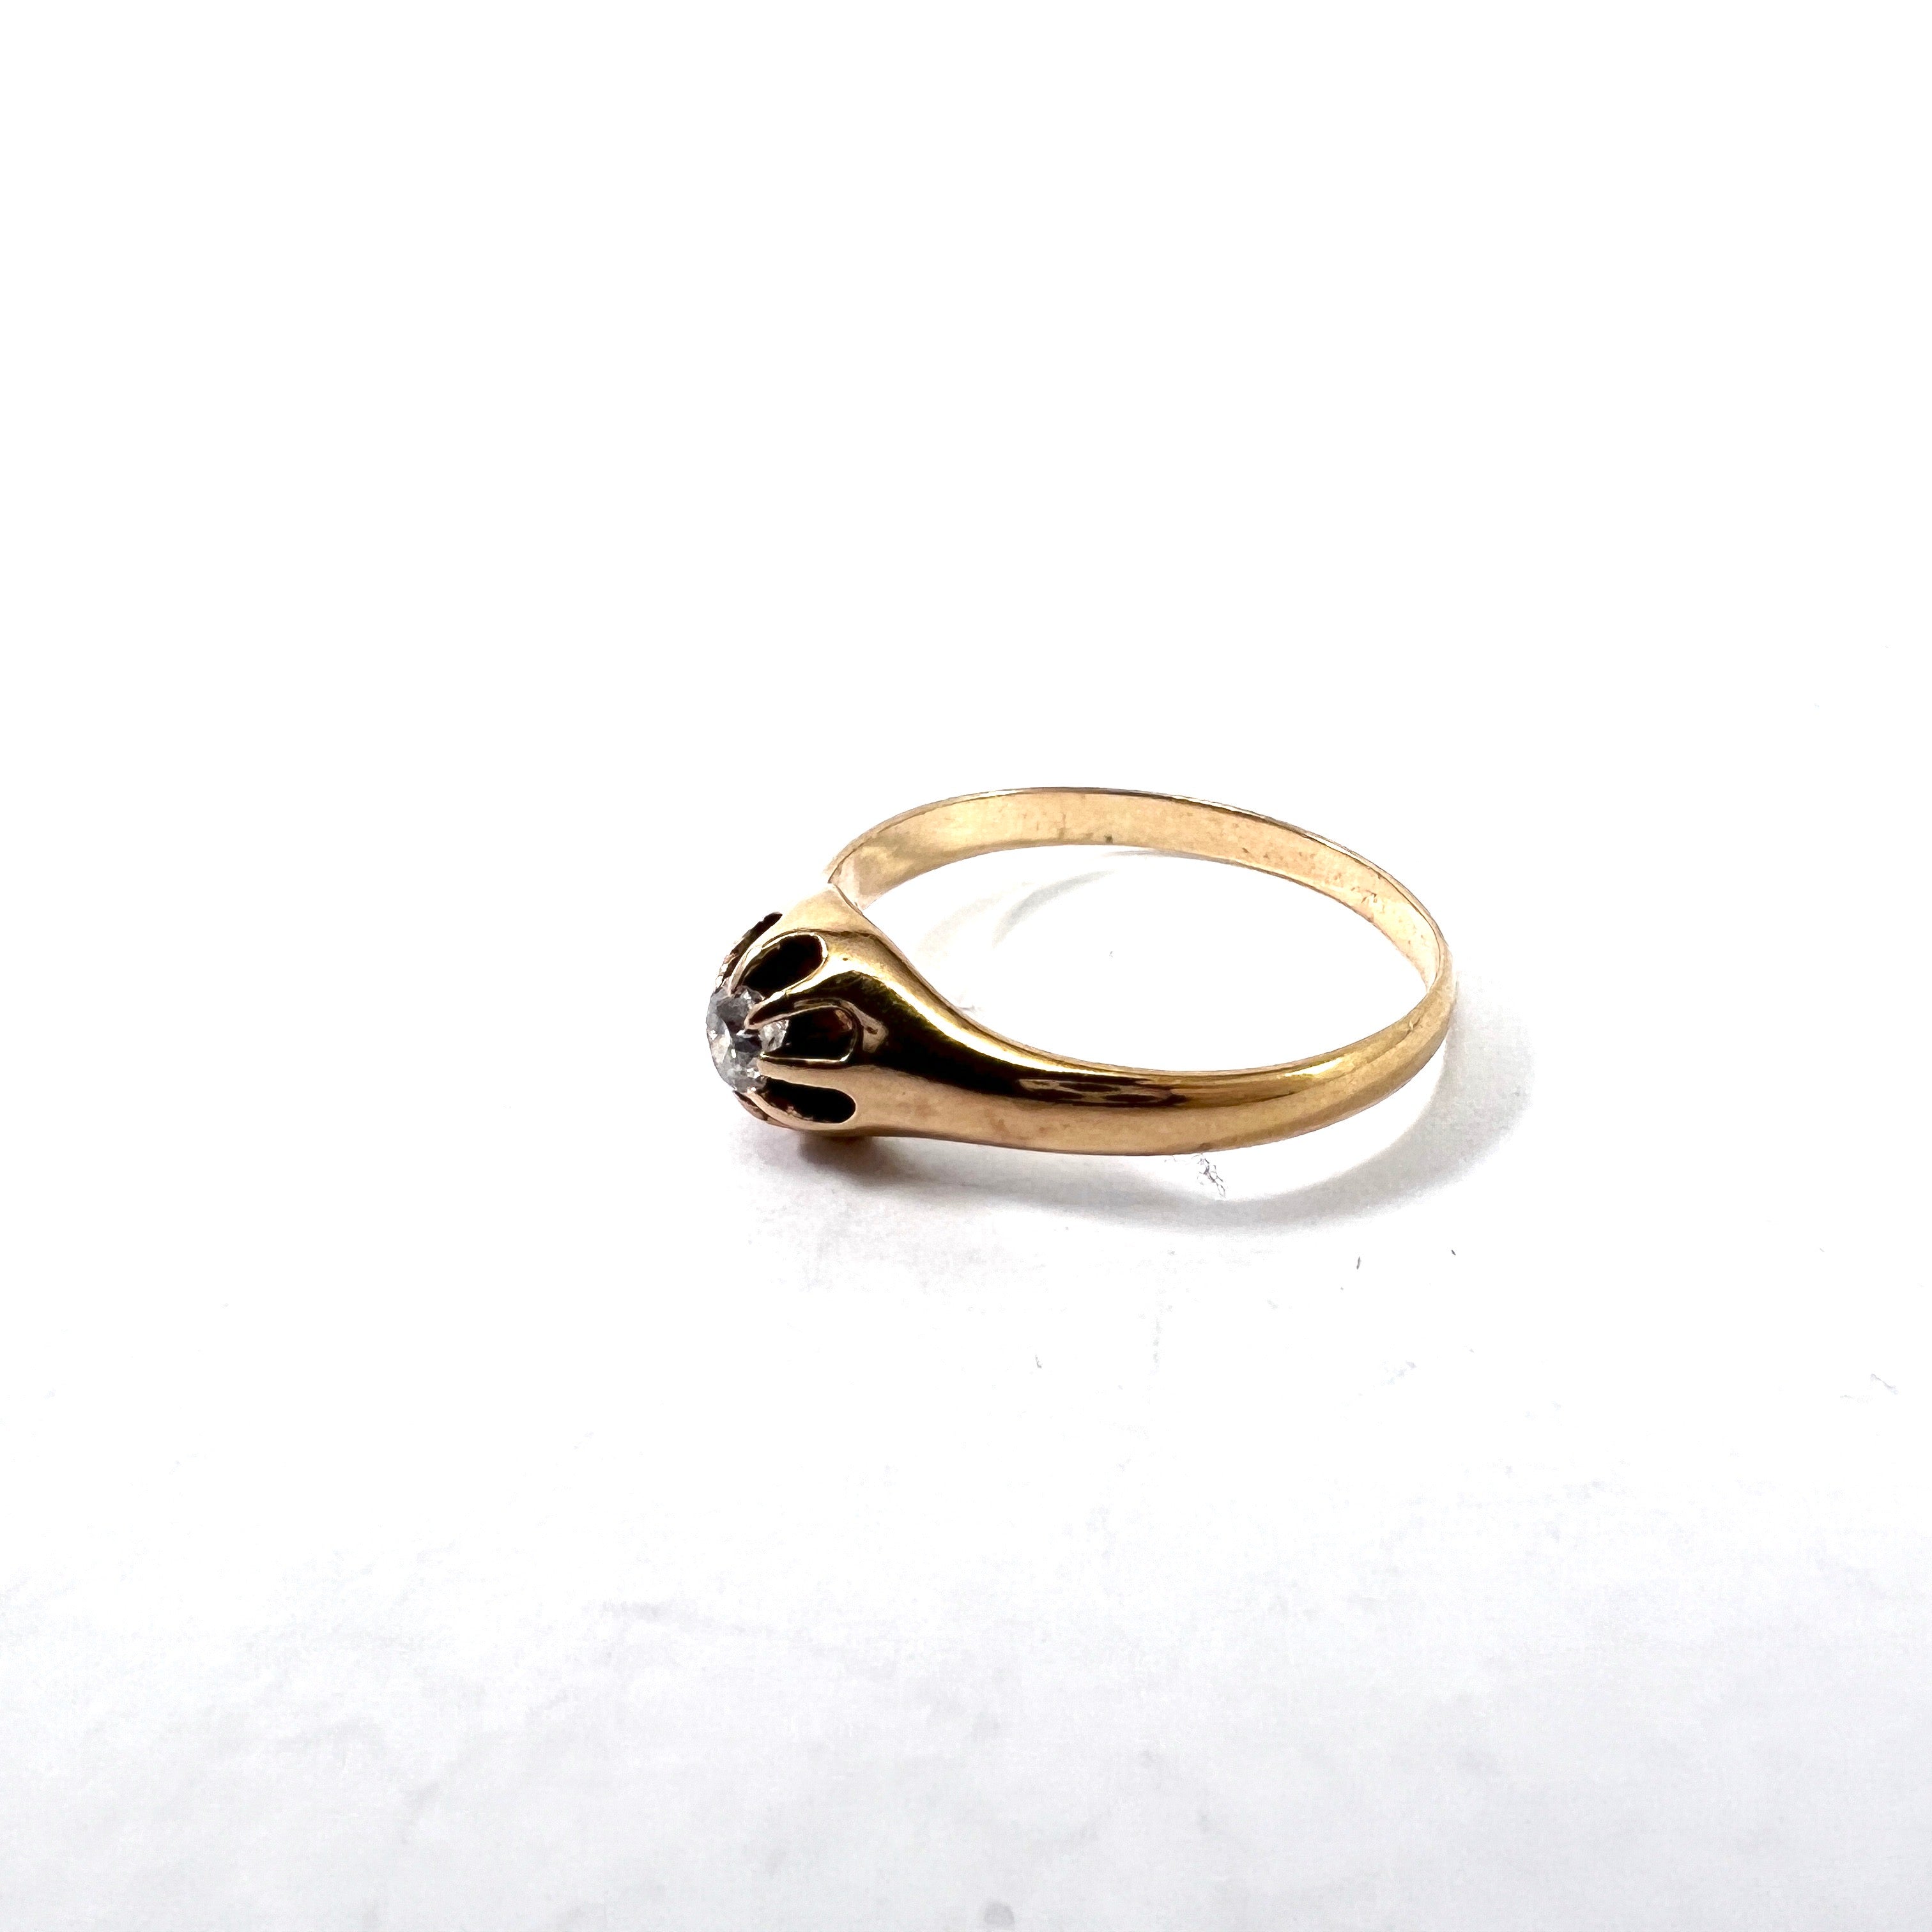 Maker KVK, Germany c 1930-40s. Vintage 14k Gold 0.17ct Diamond Ring.